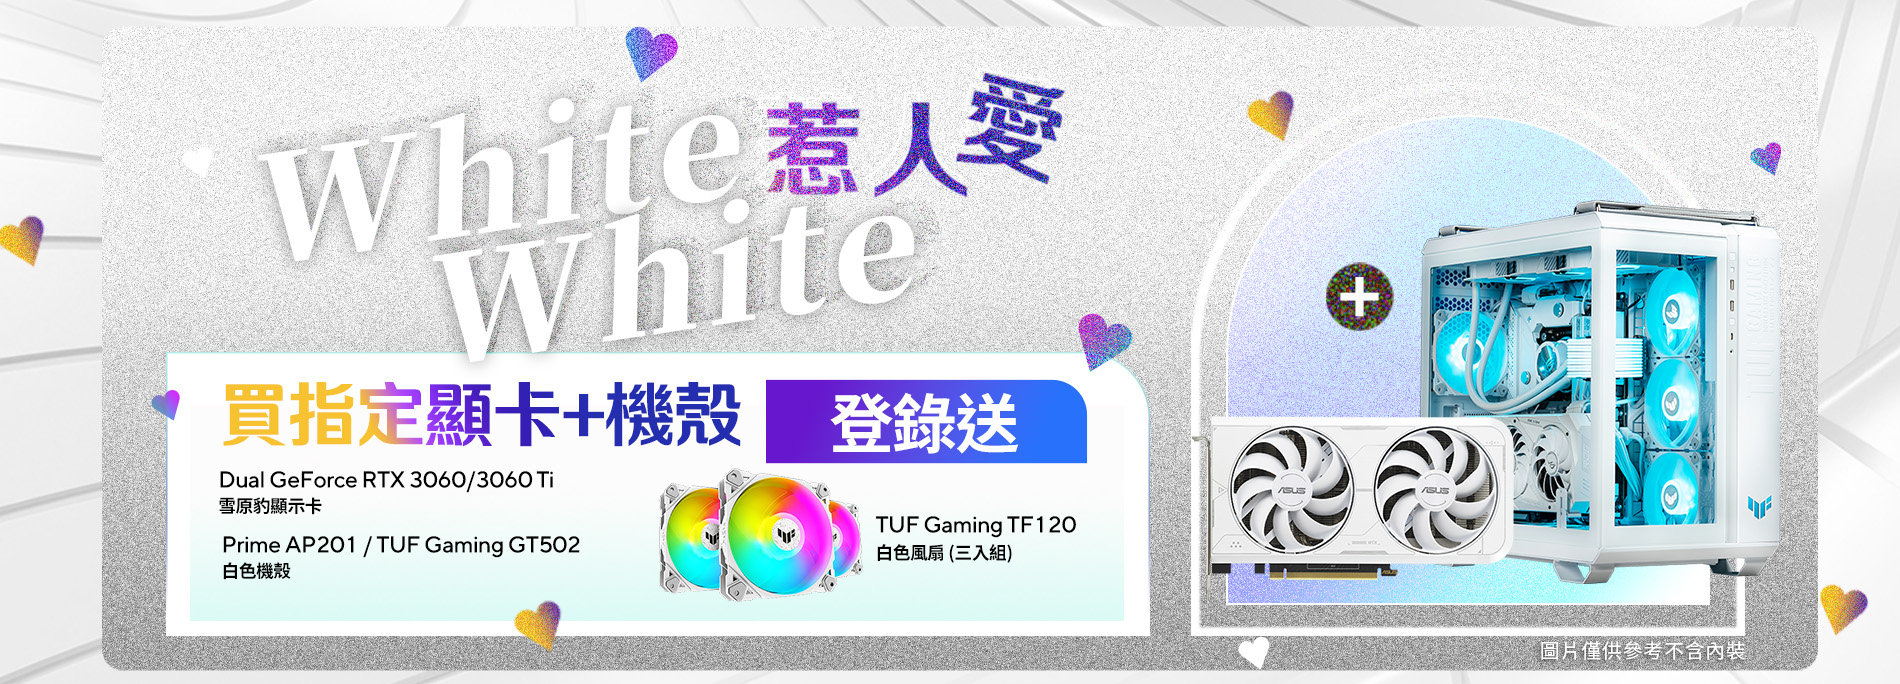 【White White 惹人愛】活動期間單筆購買華碩 Dual GeForce RTX 3060 / 3060 Ti 雪原豹顯示卡 + TUF Gaming GT502/ Prime AP201 白色機殼，登錄送 『TUF Gaming TF120 白色風扇(三入組)』。(價值$1,690，數量有限，送完為止)